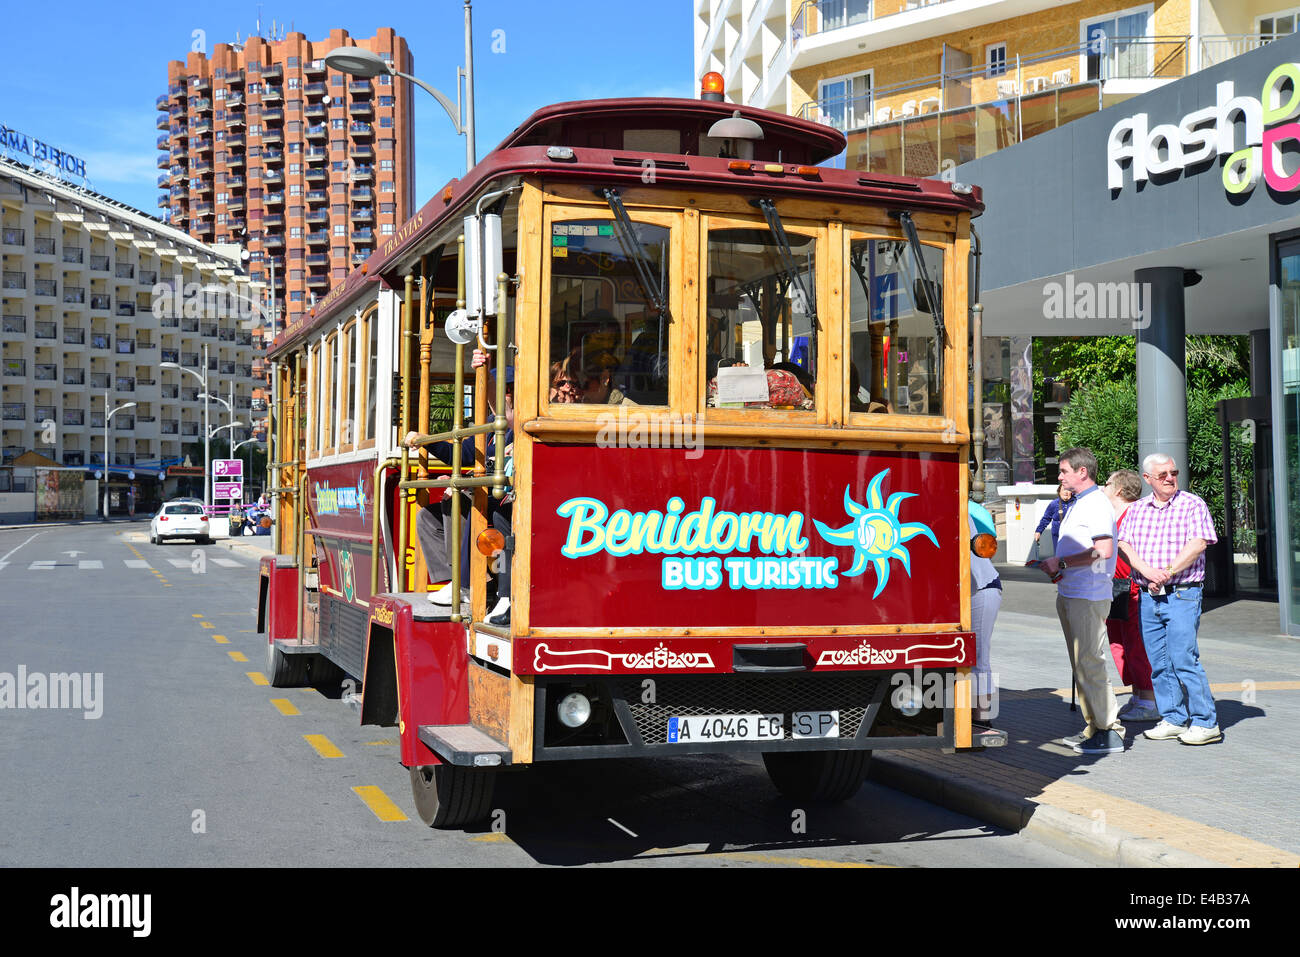 Benidorm Autobus turistico, calle Gerona, Benidorm, Costa Blanca, Alicante provincia,Spagna Foto Stock